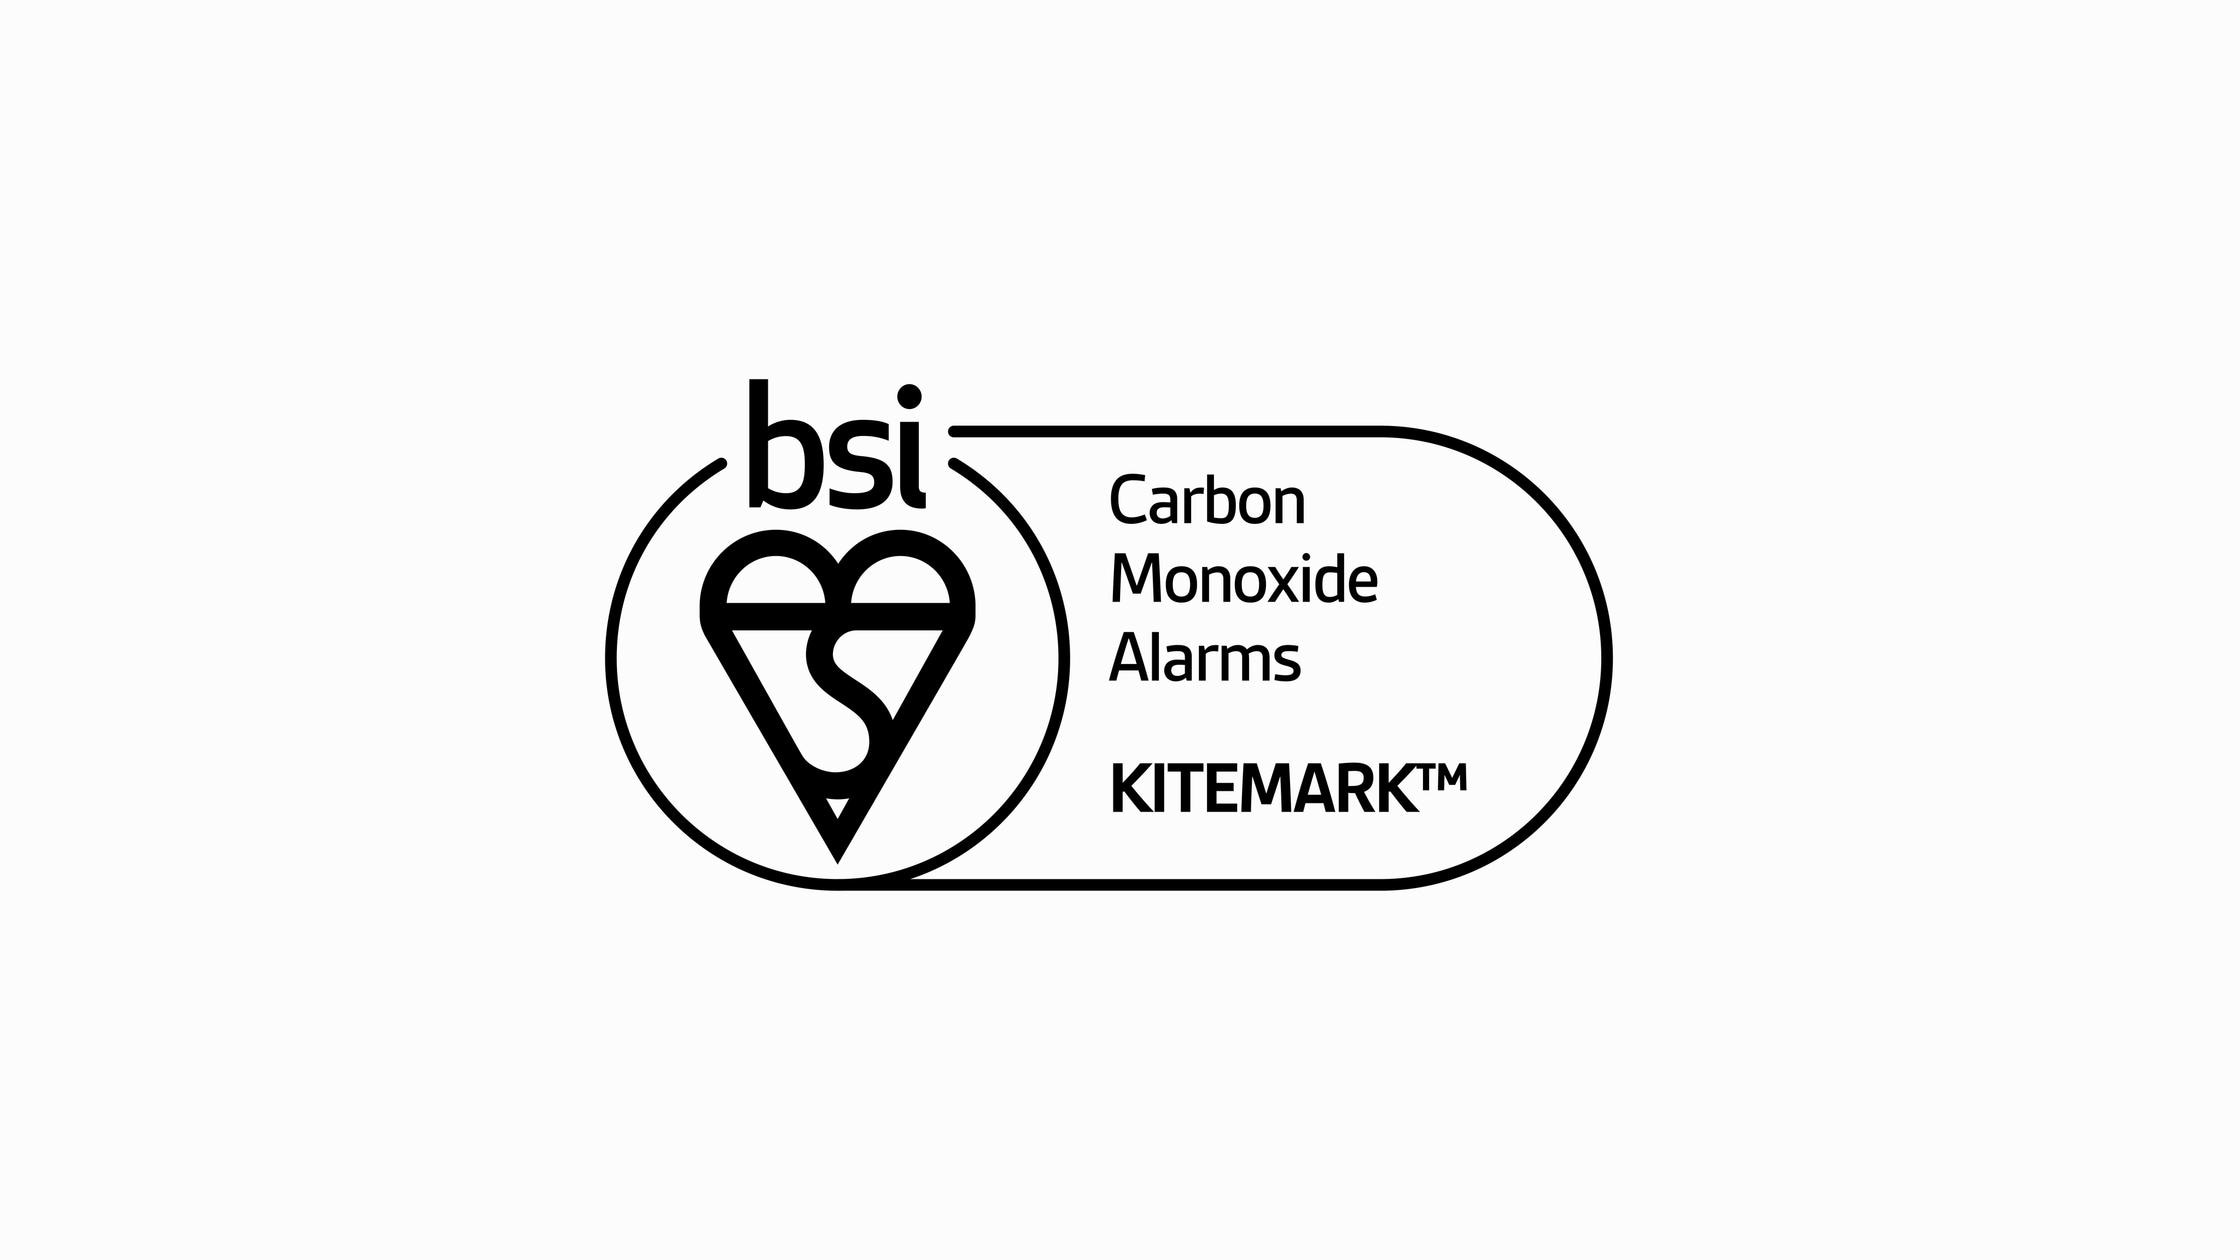 Kitemark - Carbon Monoxide Alarms